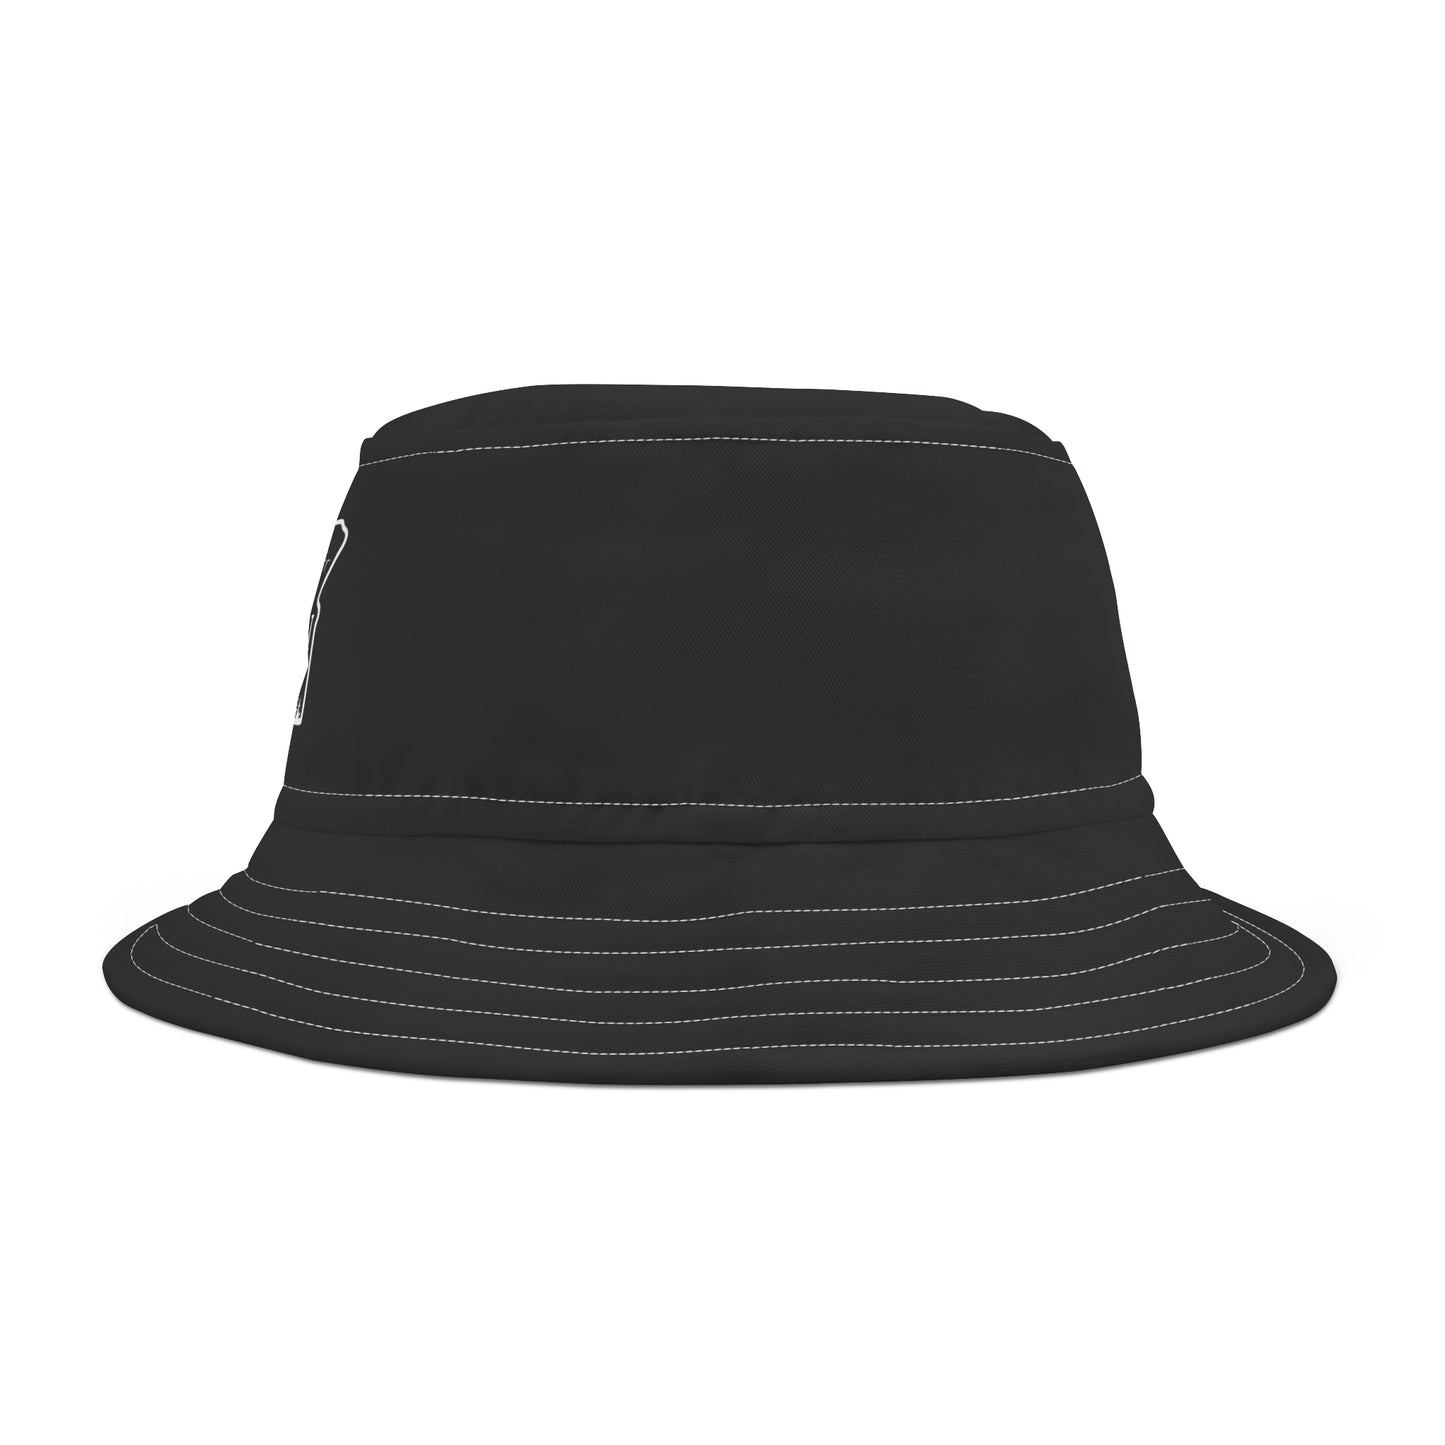 Oregon Bucket Hat